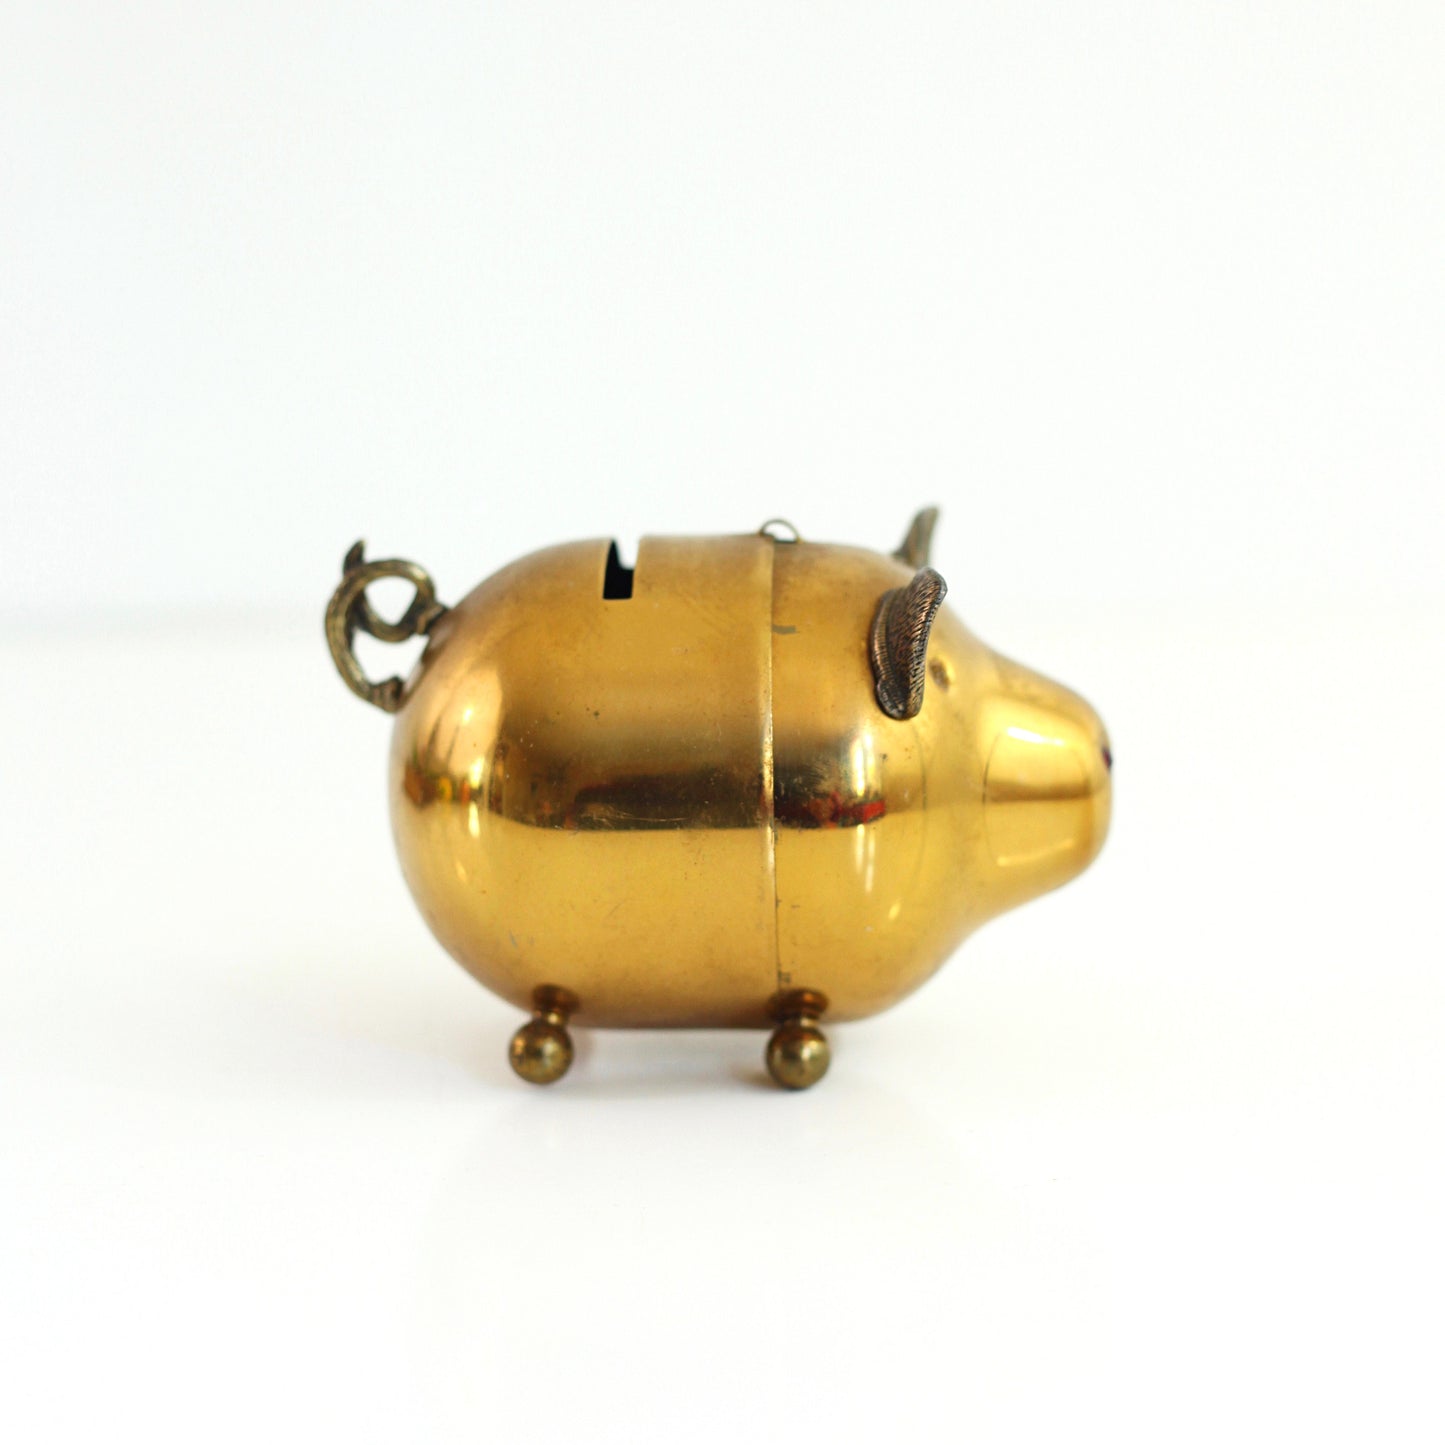 SOLD - Vintage Brass Piggy Bank